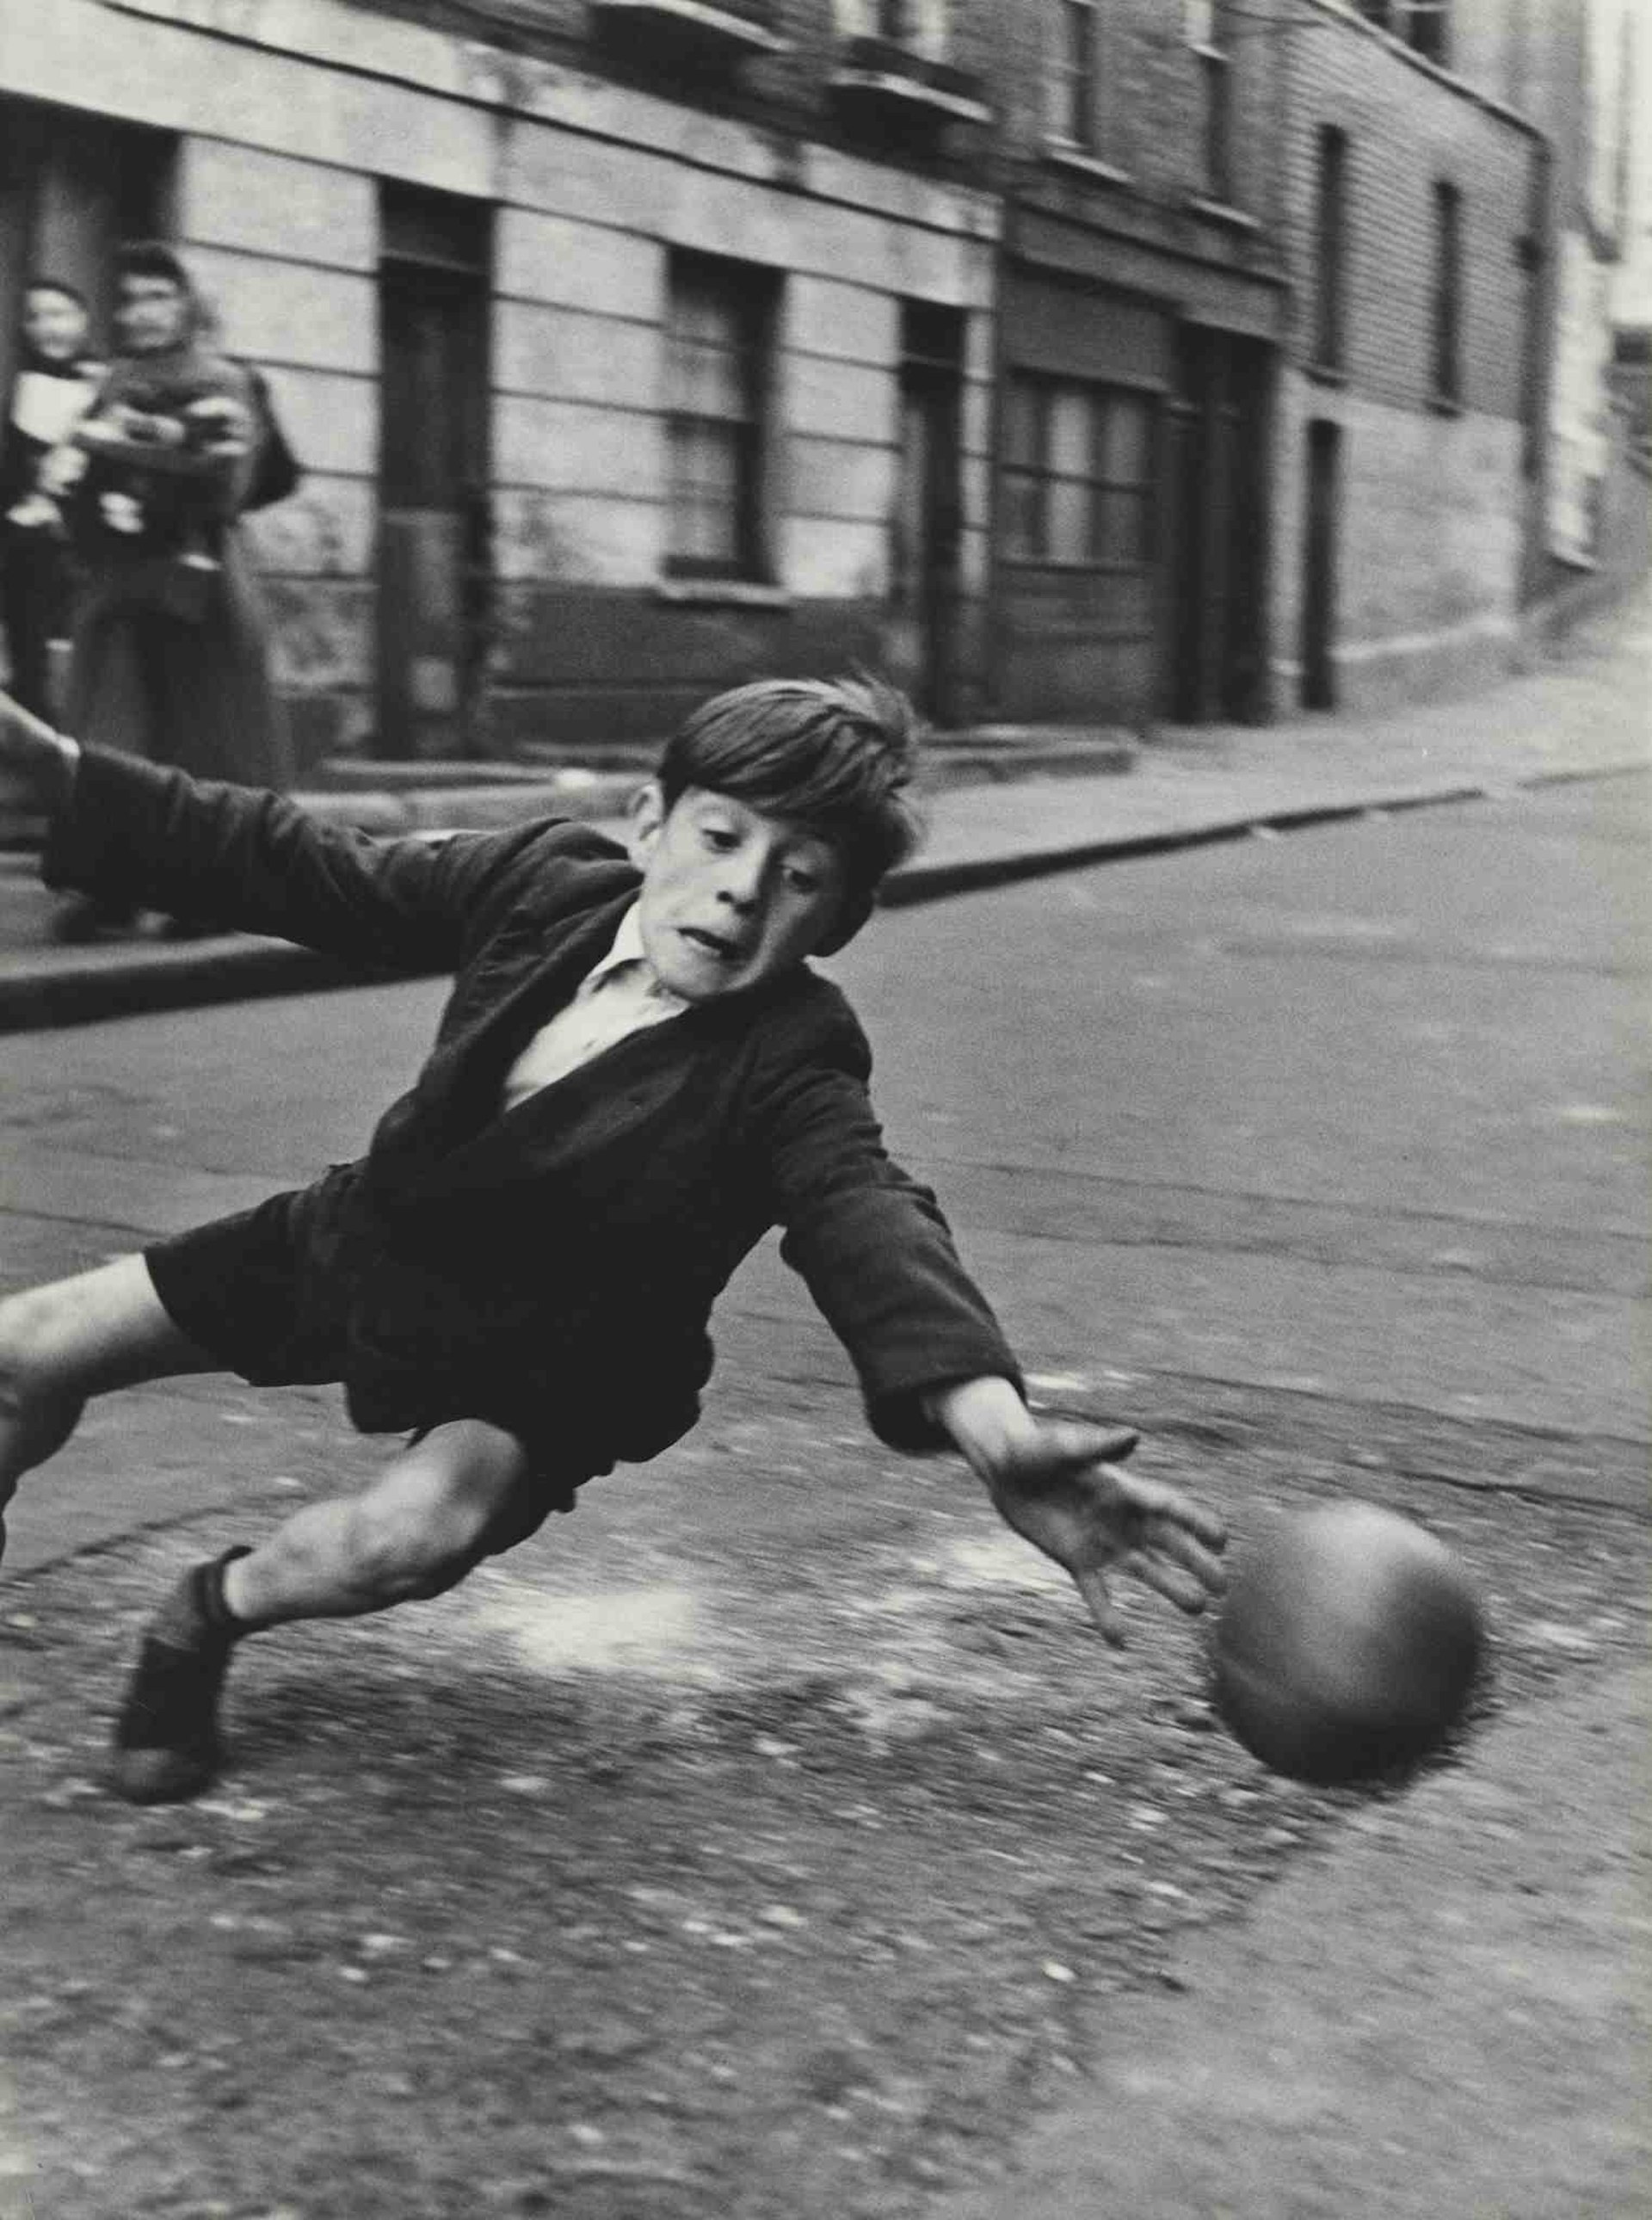 Goalie, Brindley Road, Paddington, London, 1956.